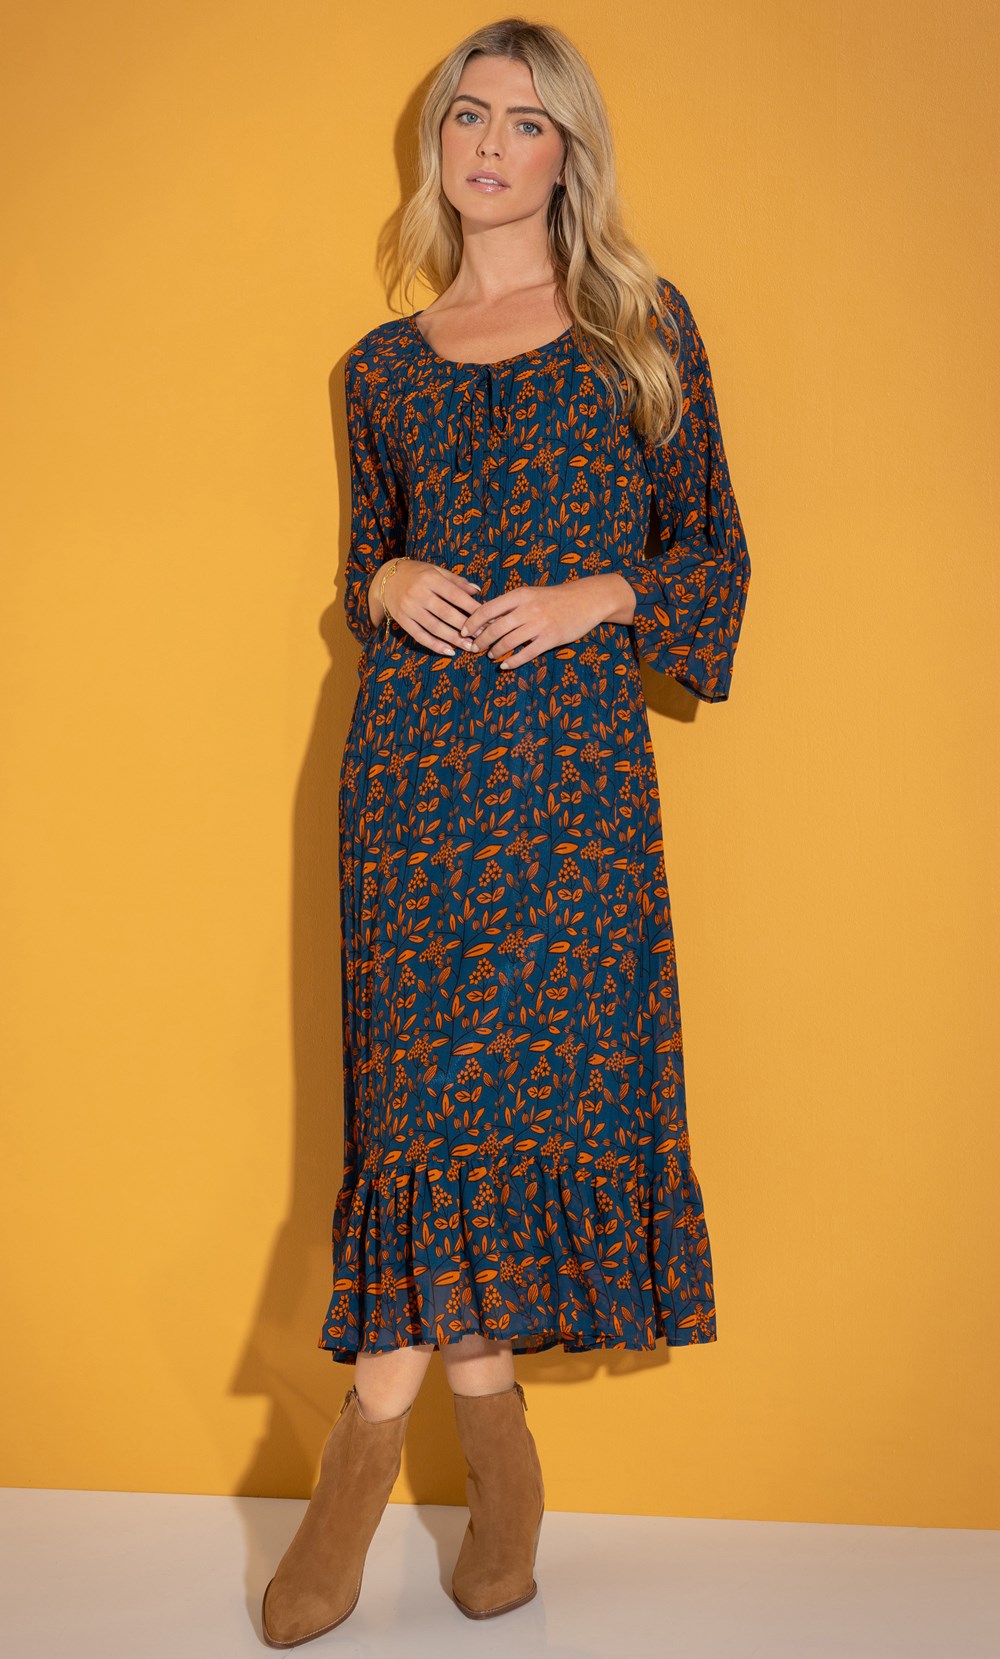 Brands - Klass Floral Print Pleated Midaxi Dress Teal/Orange Women’s